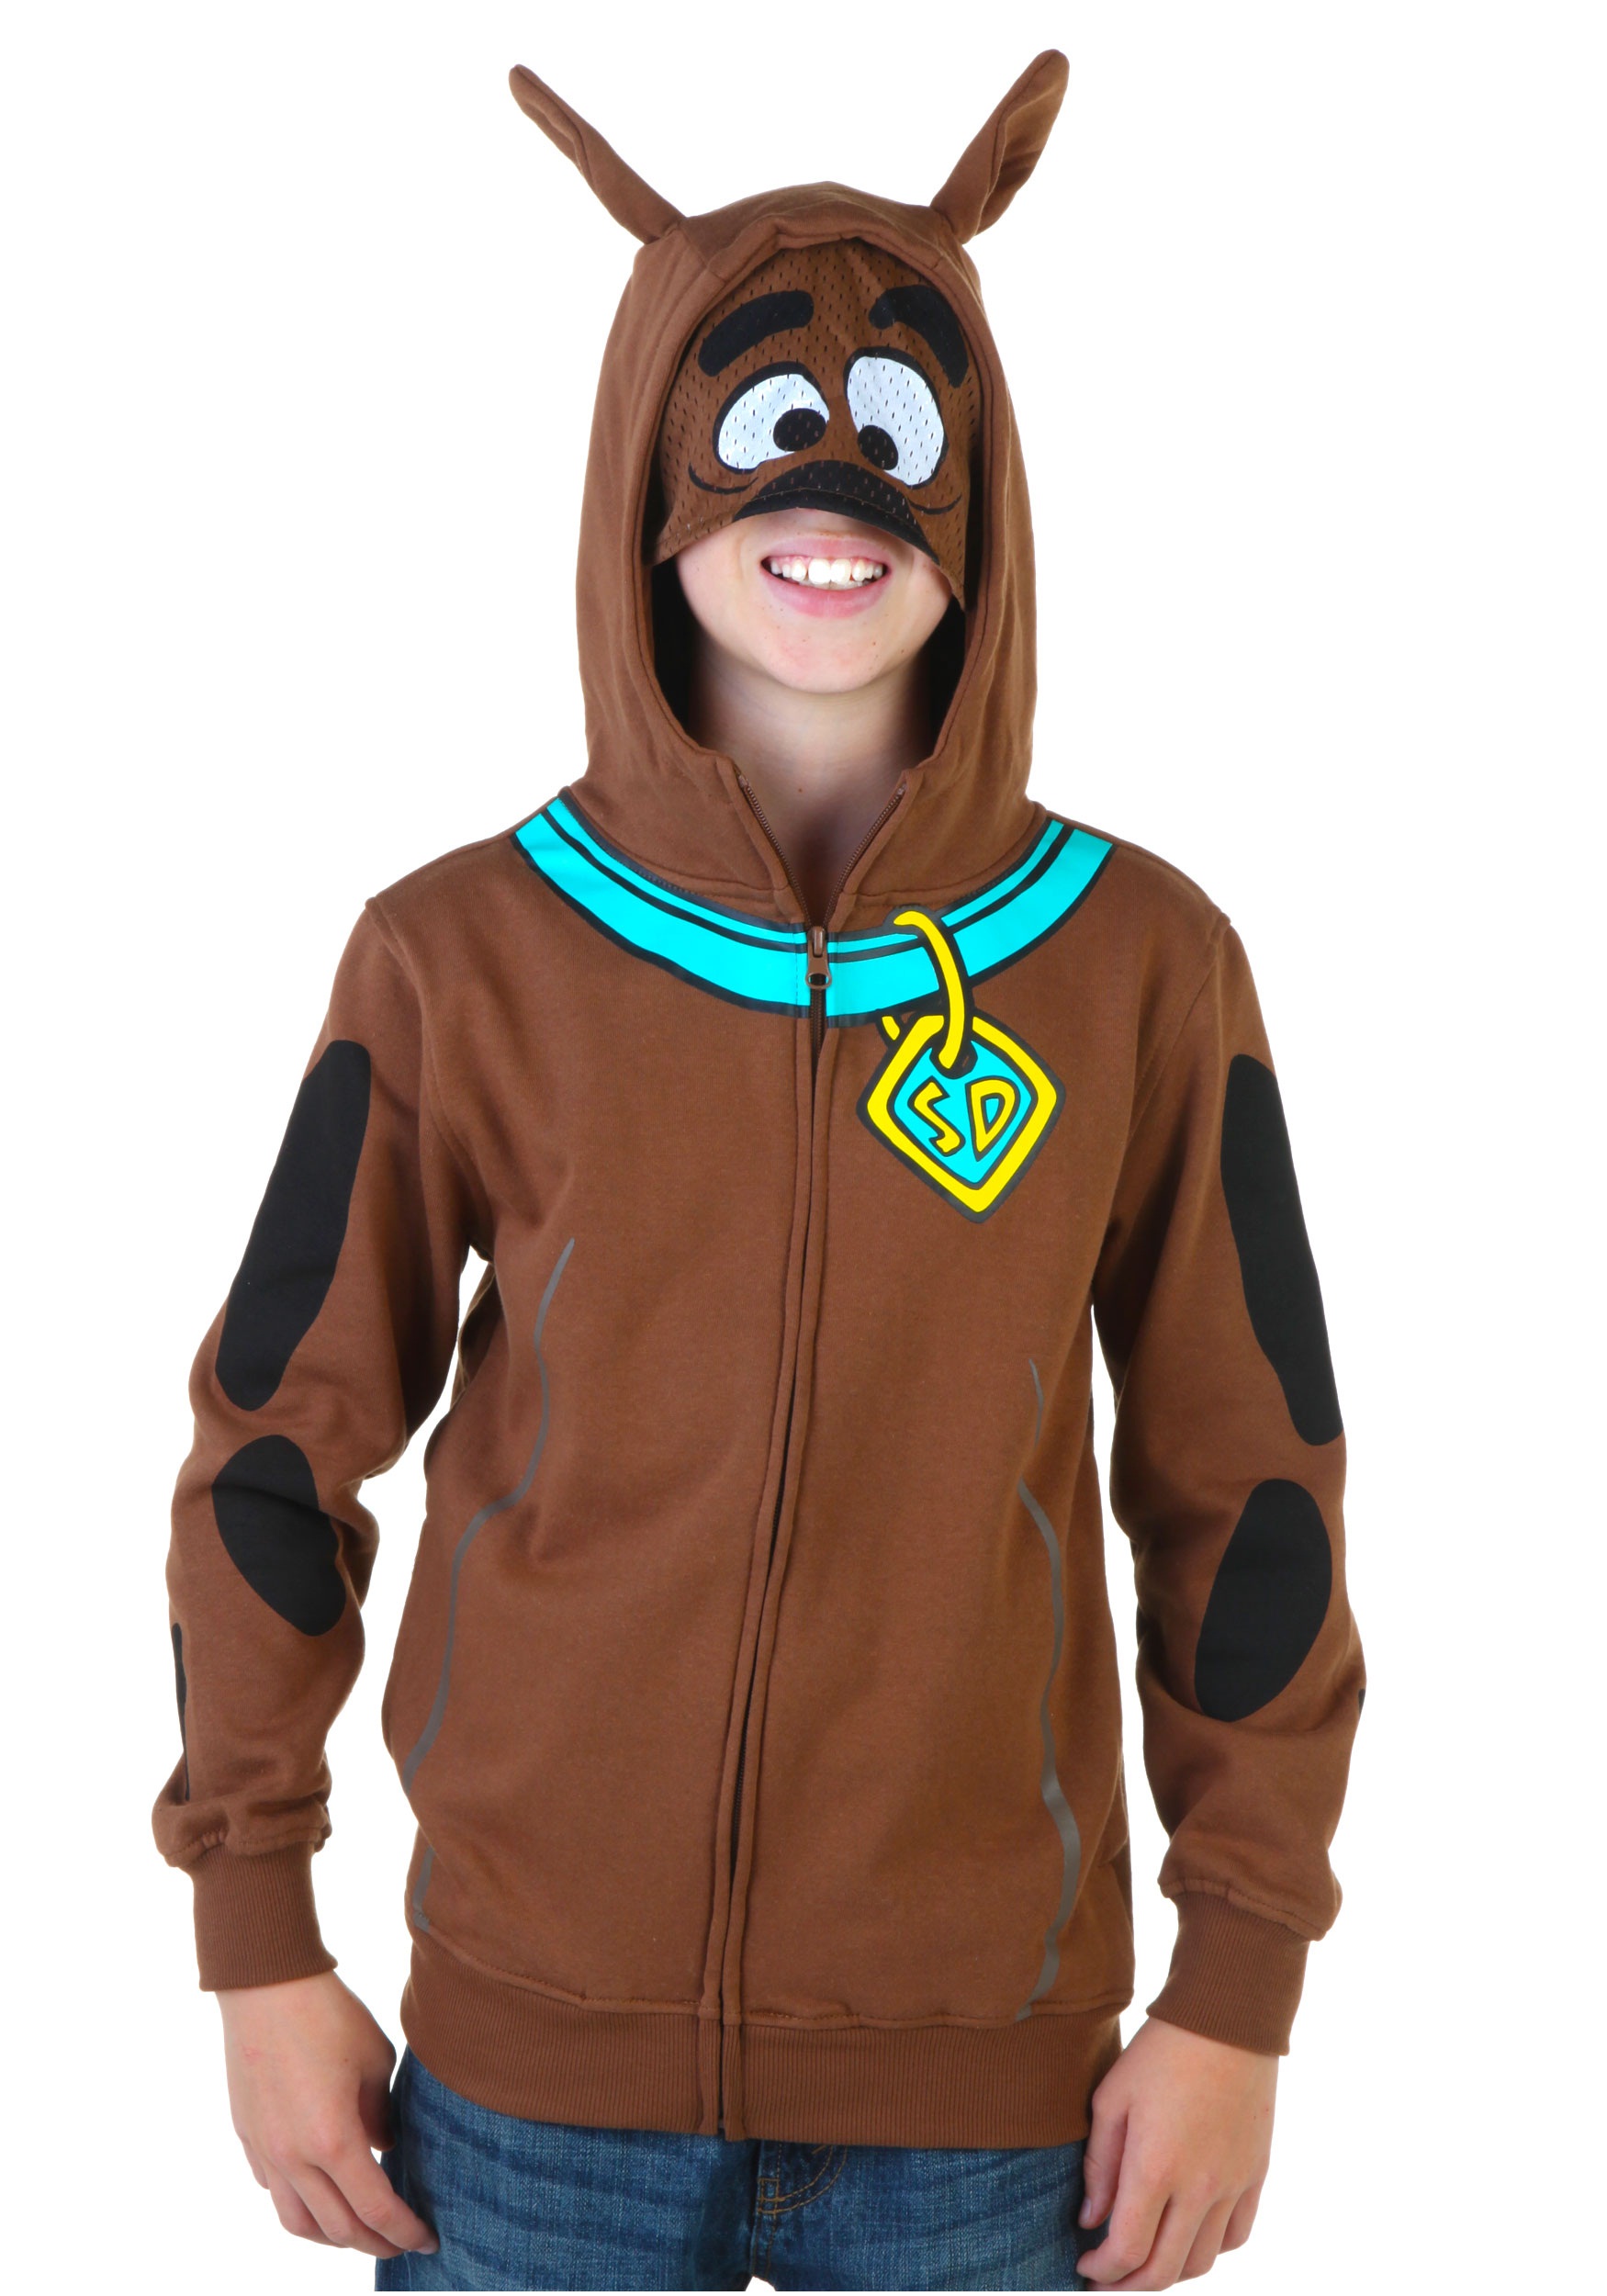 Scooby Doo Toddler Costume.